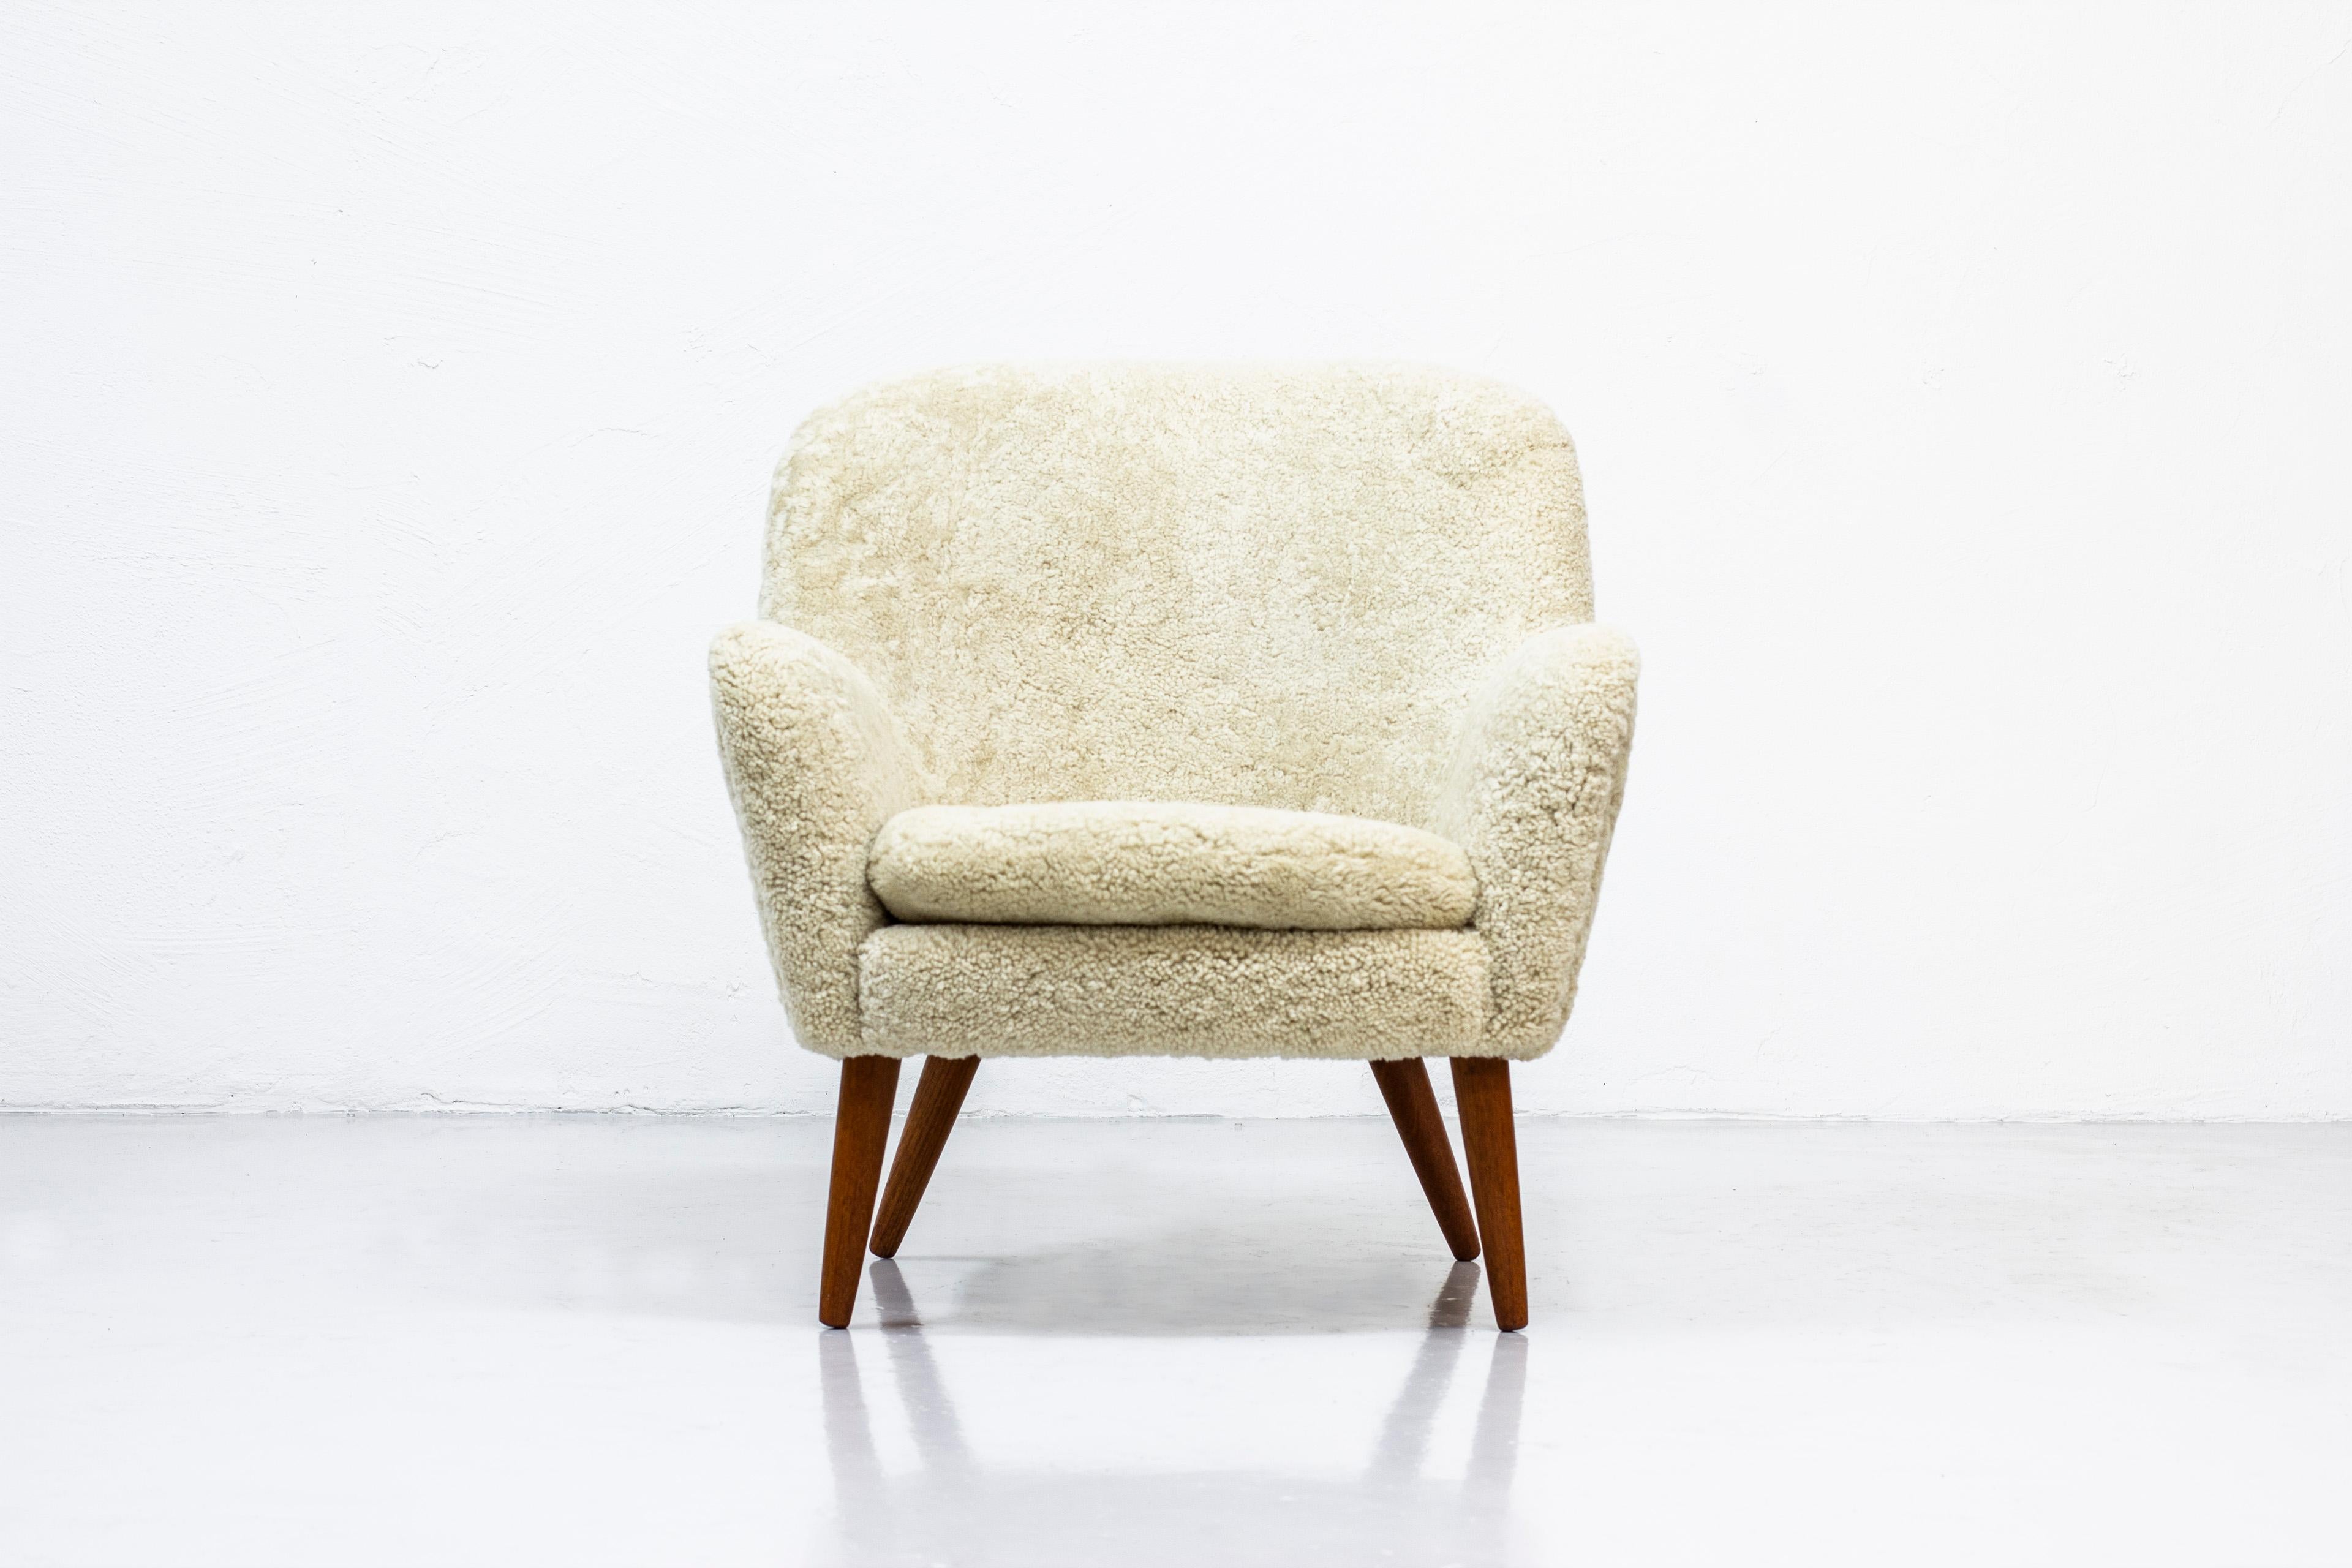 Sheepskin Easy Chair with Sheep Skin by Hans Olsen, Denmark, 1950s